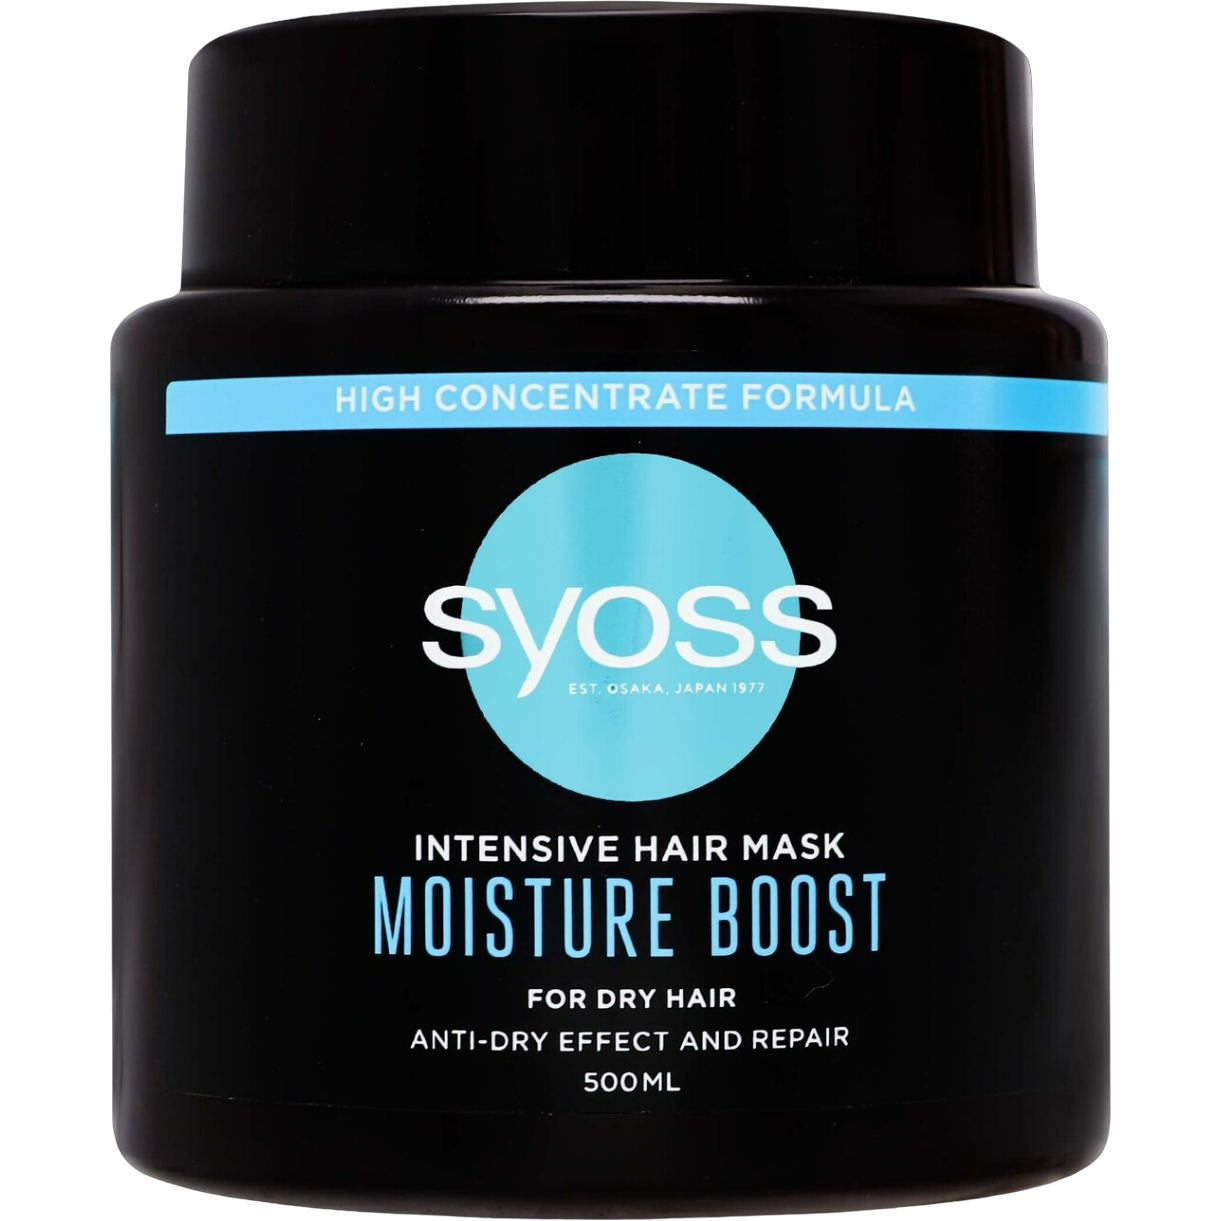 Интенсивная маска для сухих волос Syoss Moisture Boost, 500 мл - фото 1